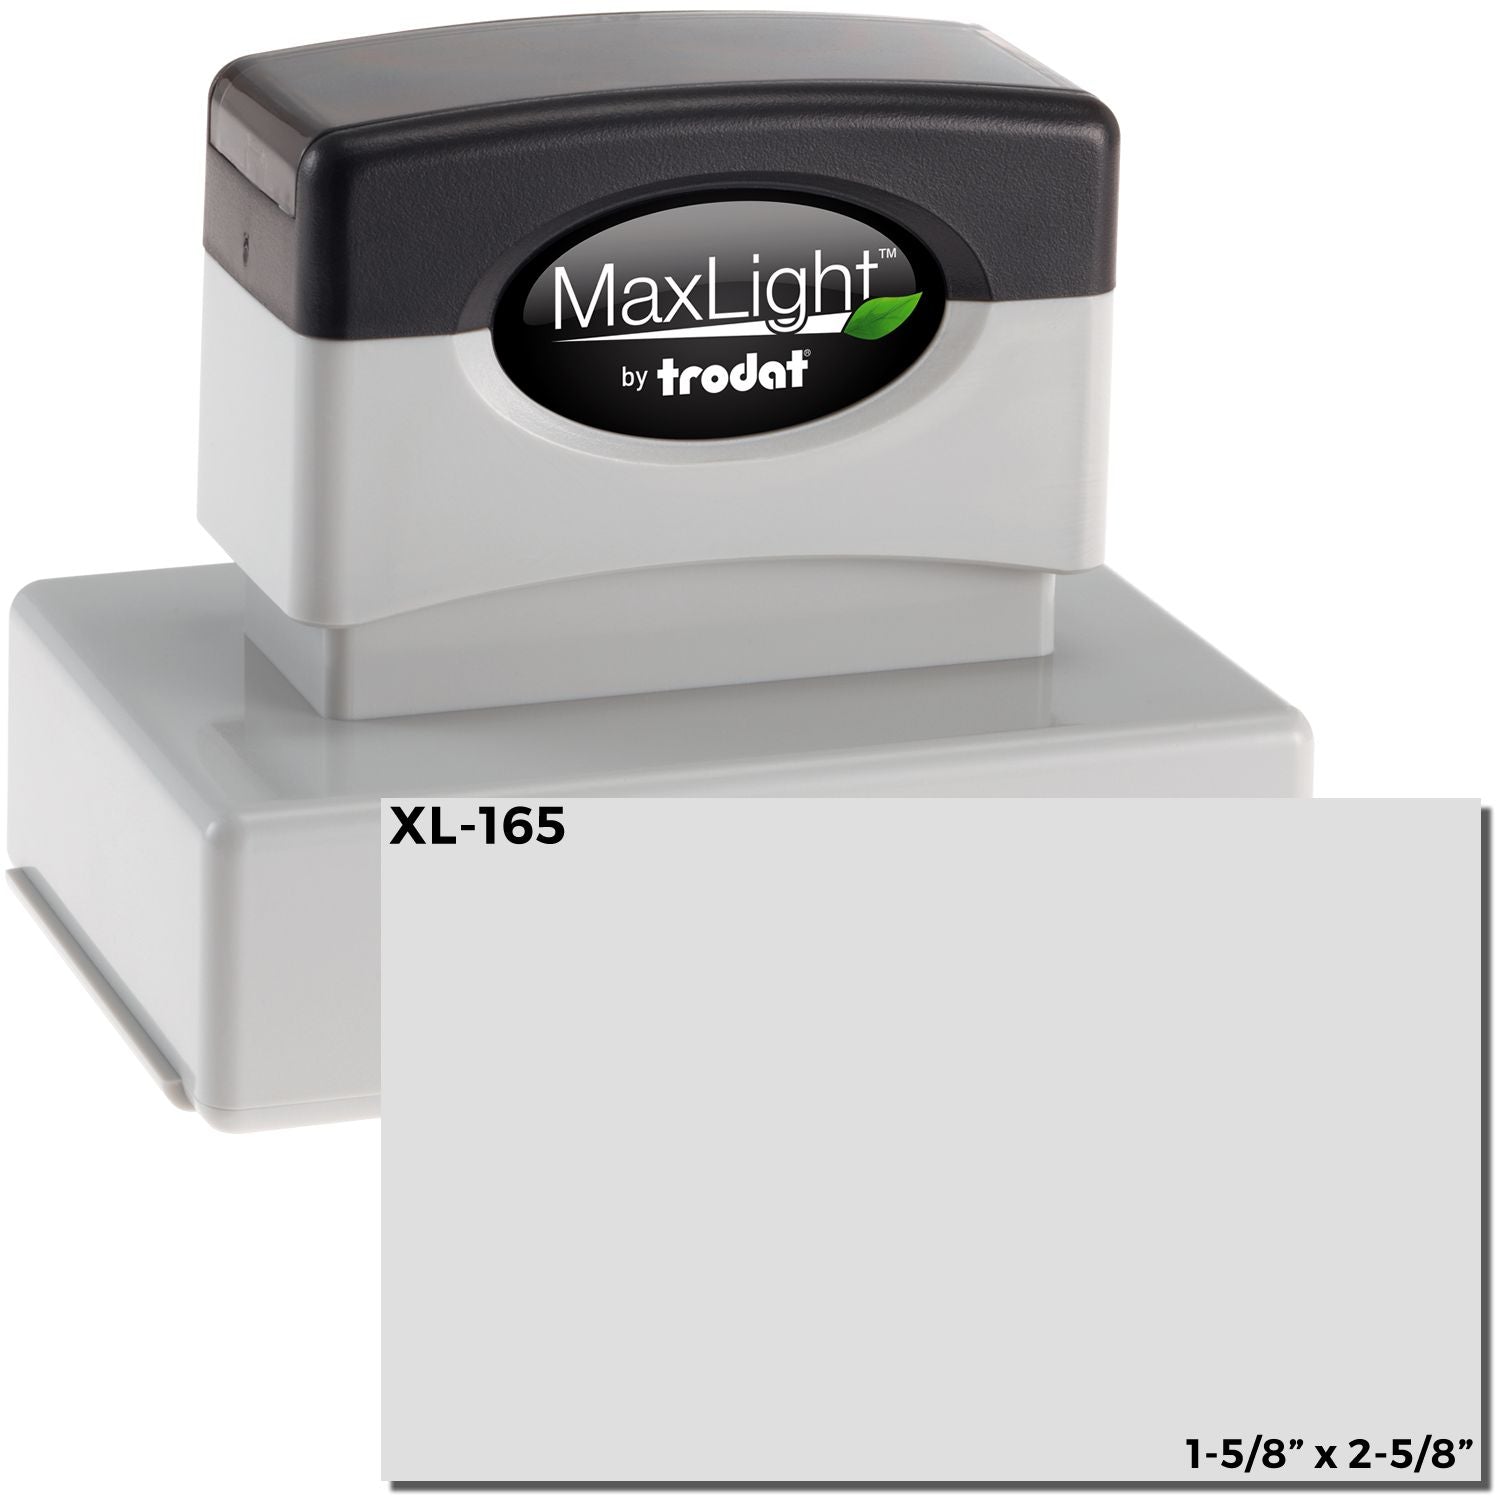 Maxlight Xl2 165 Pre Inked Stamp 1 1 2 X 2 1 2 Main Image